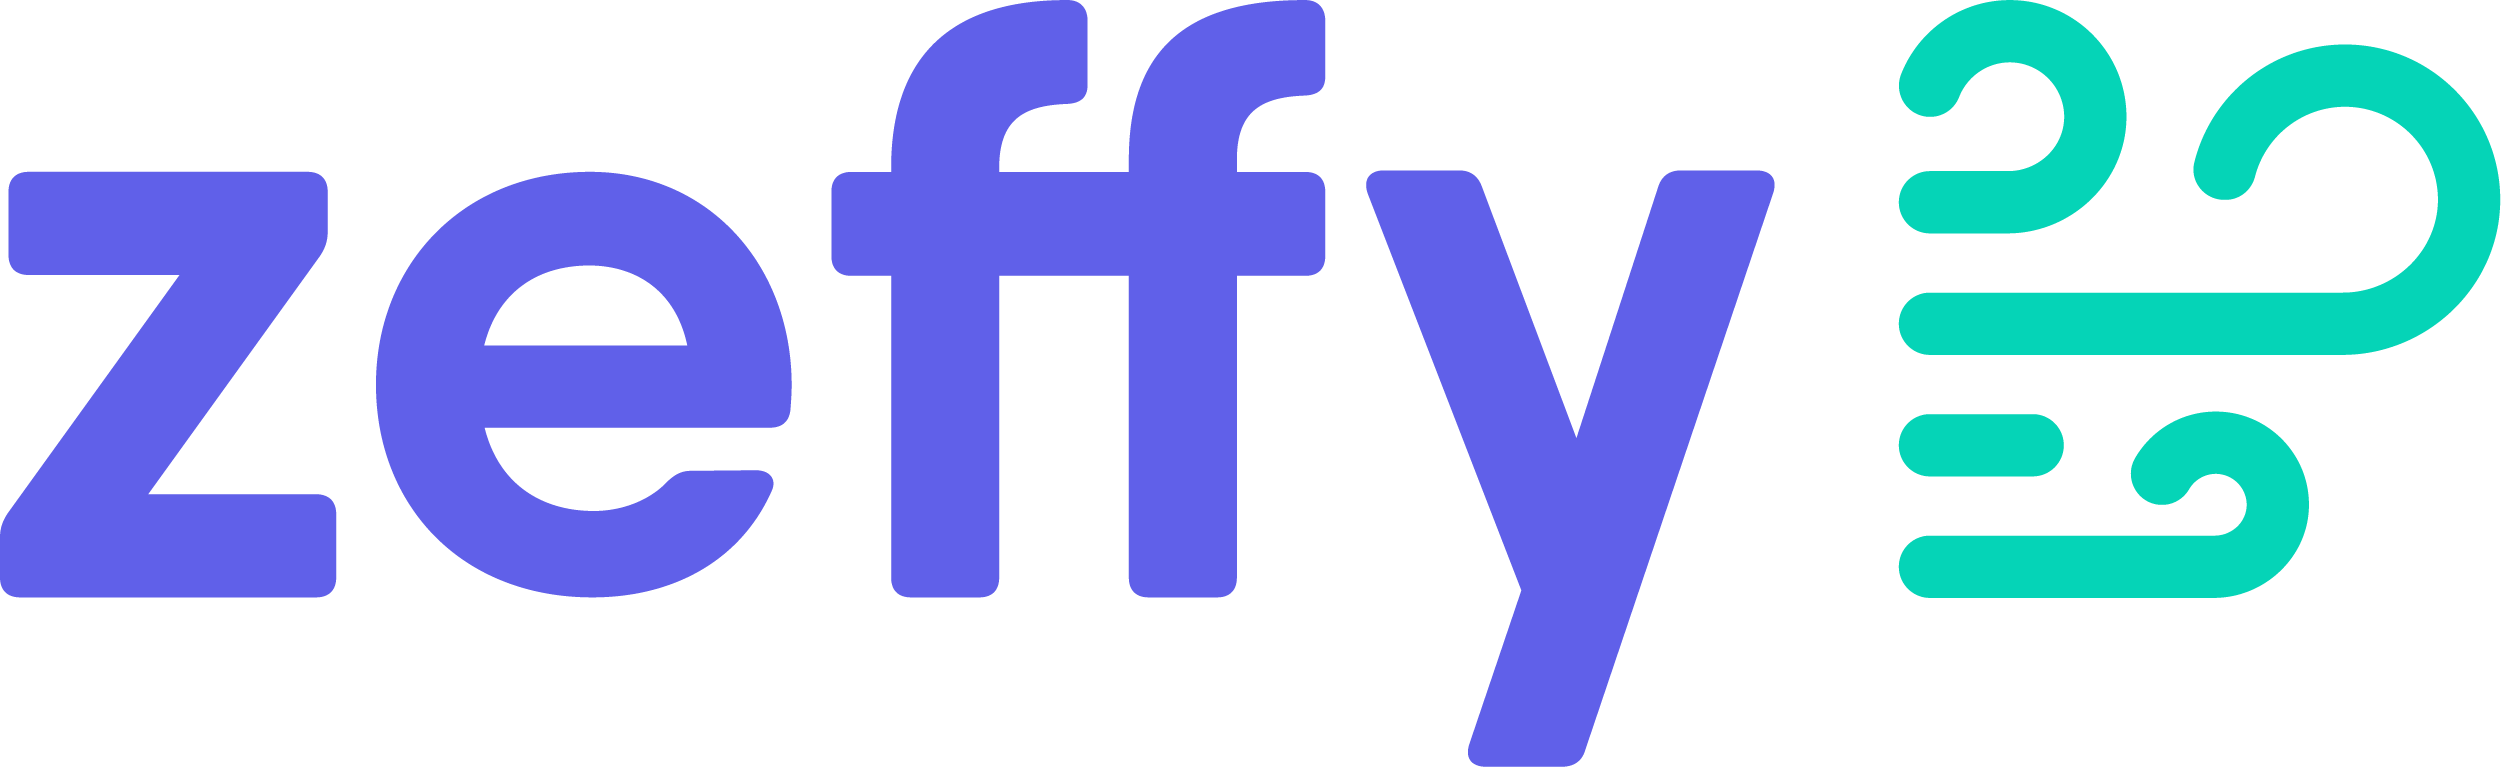 zeffy-logo